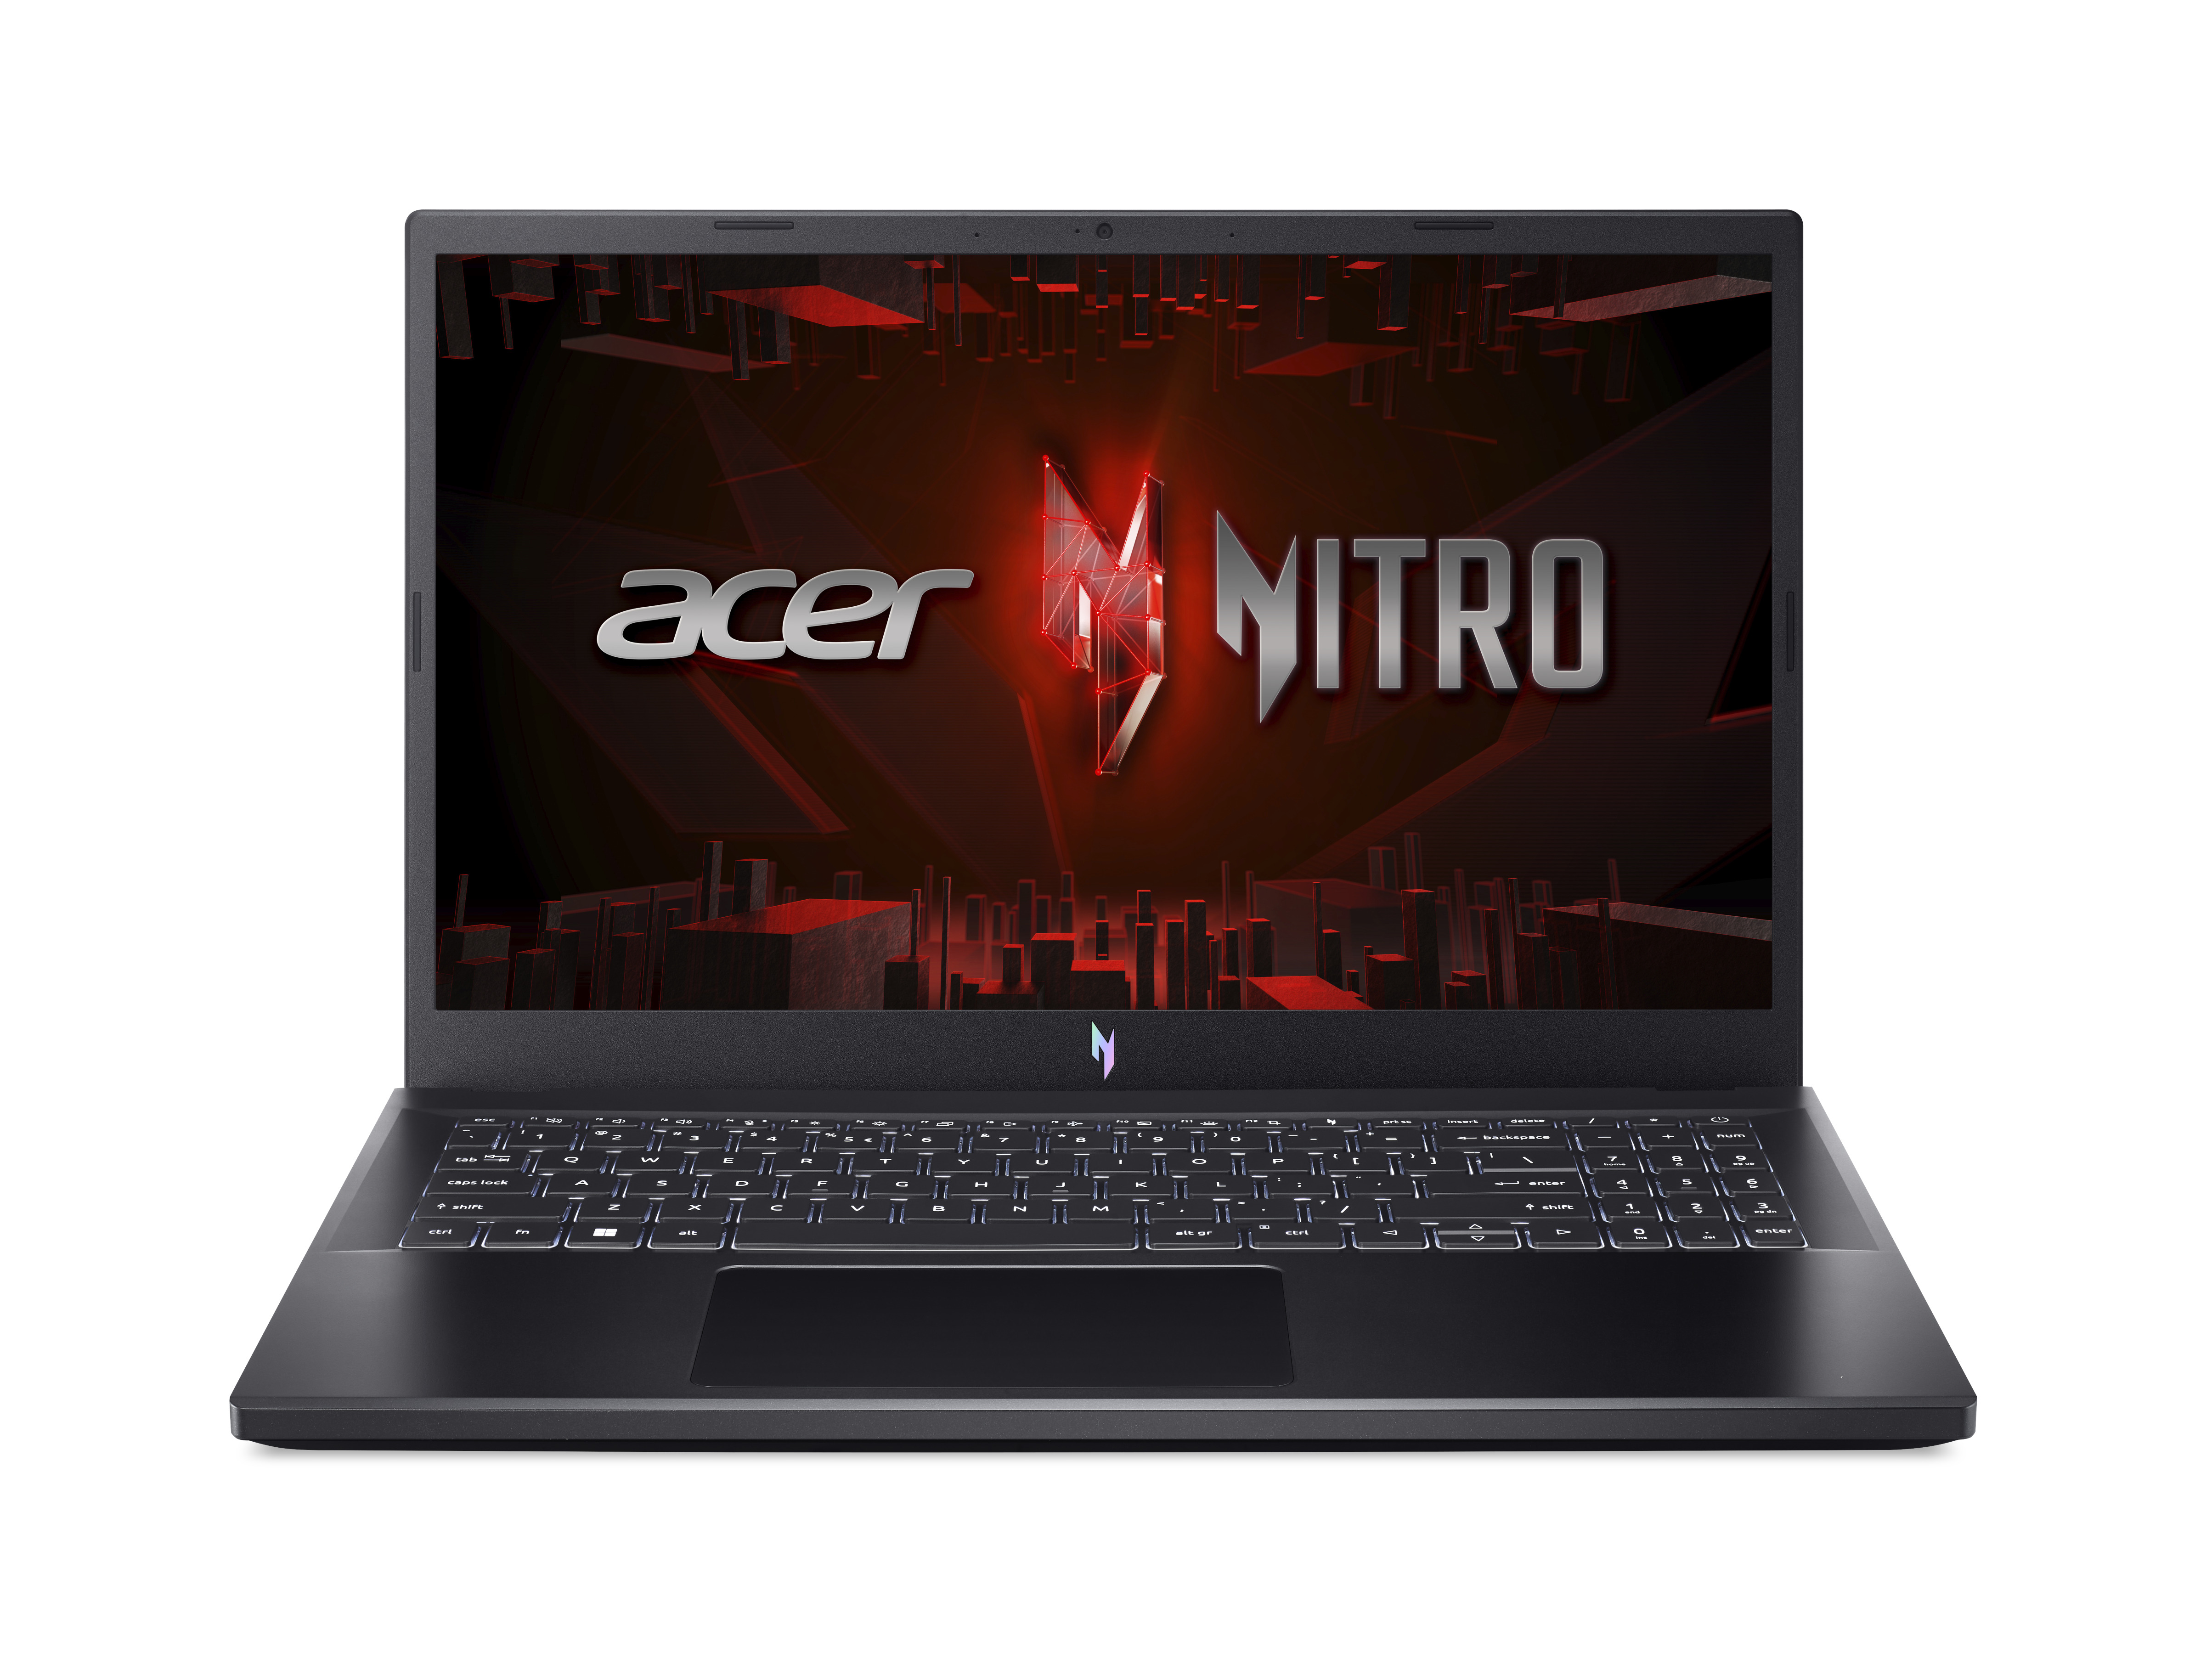 Acer Introduces Nitro V - The Next Generation of Gaming Laptops